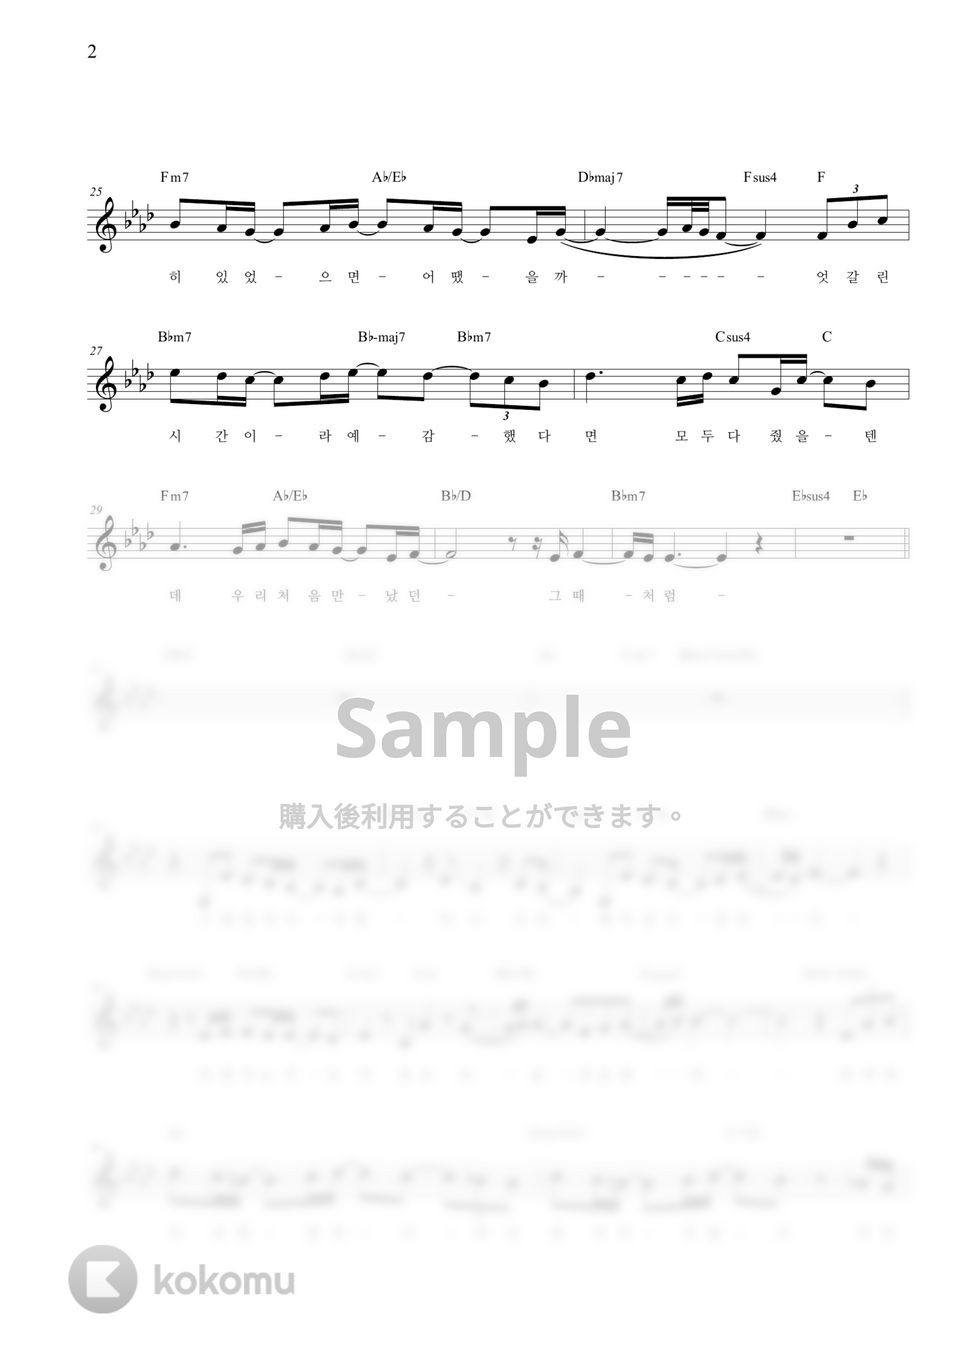 MAHA (Tea Party) - If We Were [IMITATION OST] Original Edition (Code) by KOKOMU Original